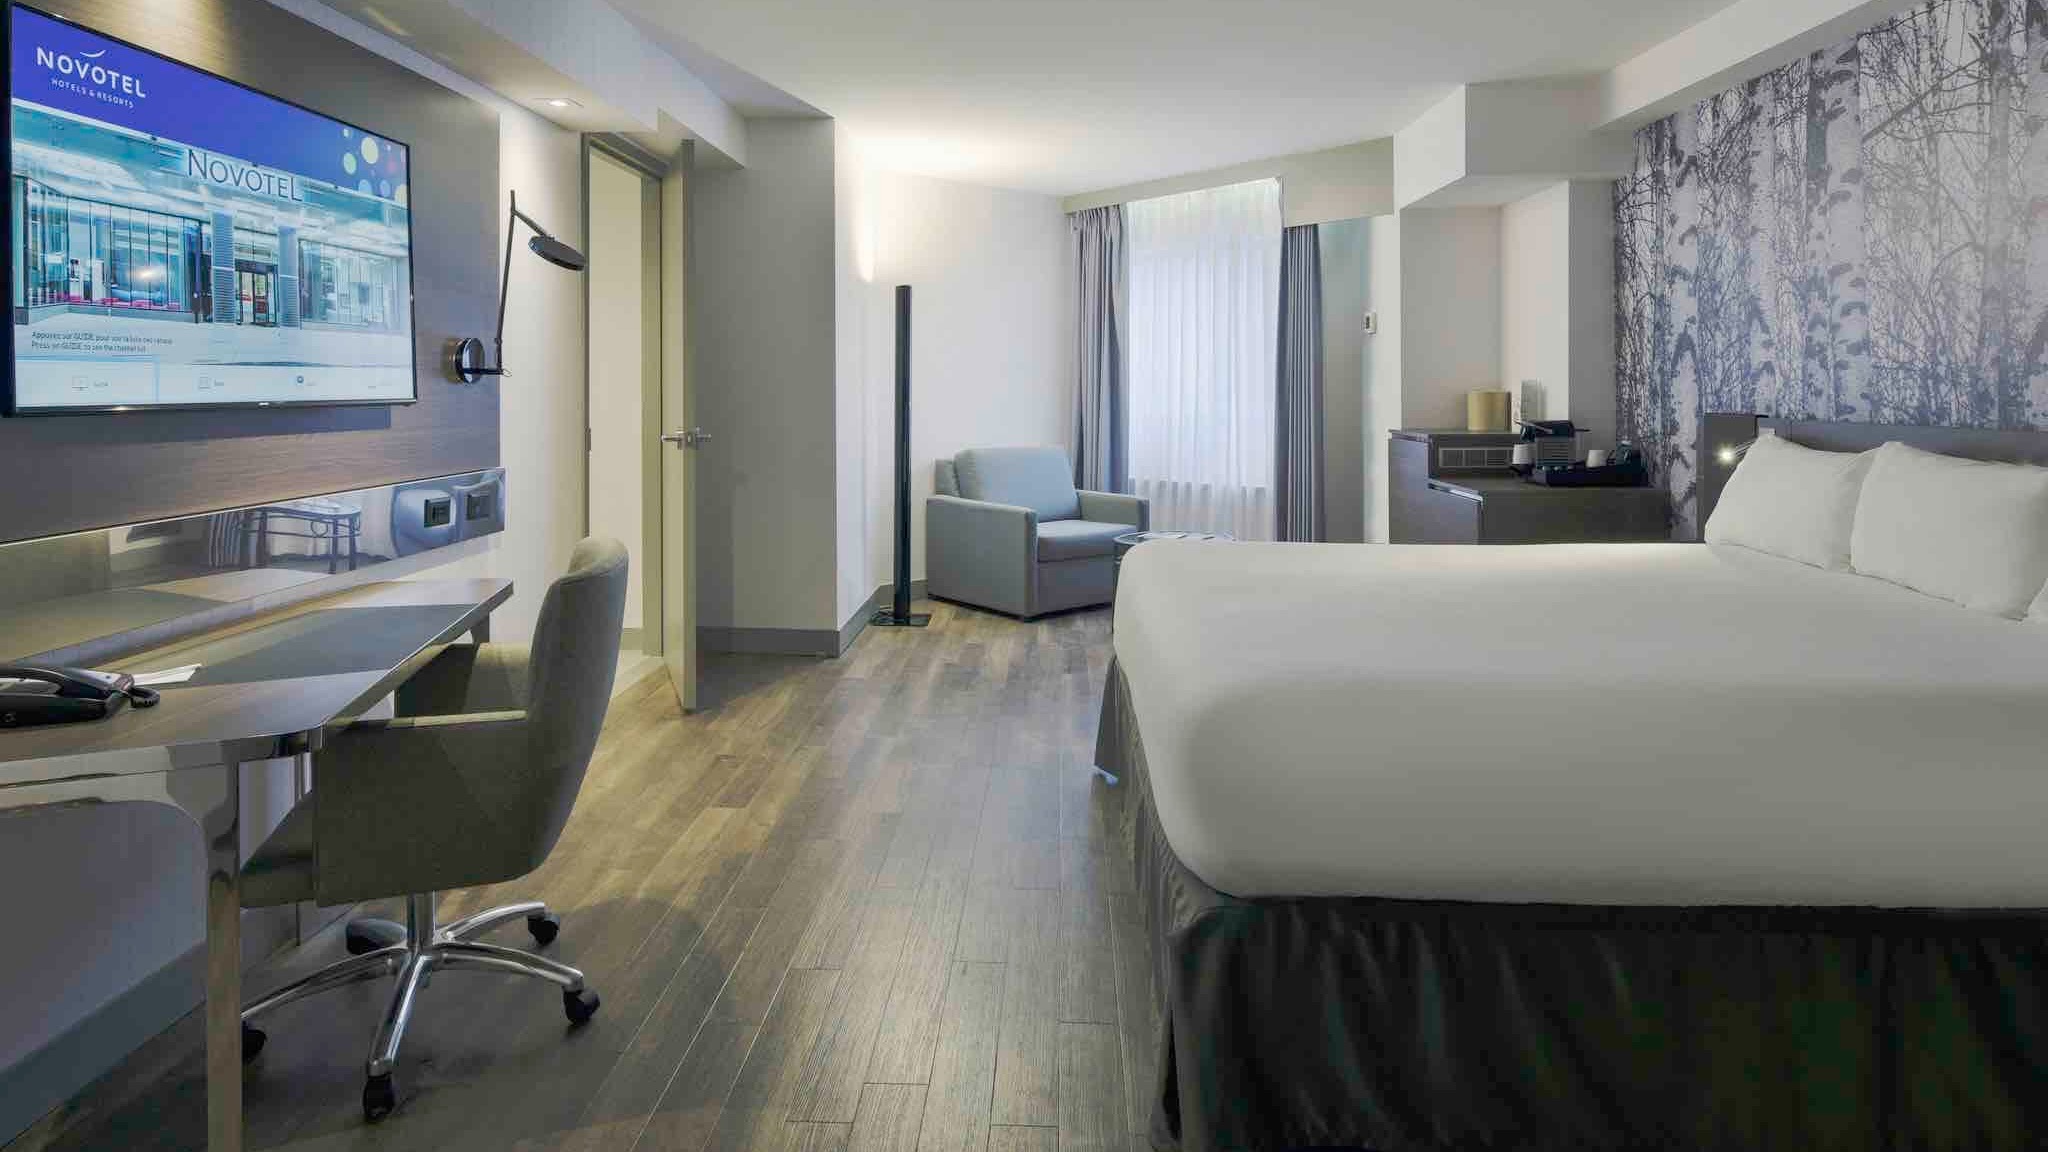 Novotel Ottawa bedroom suite